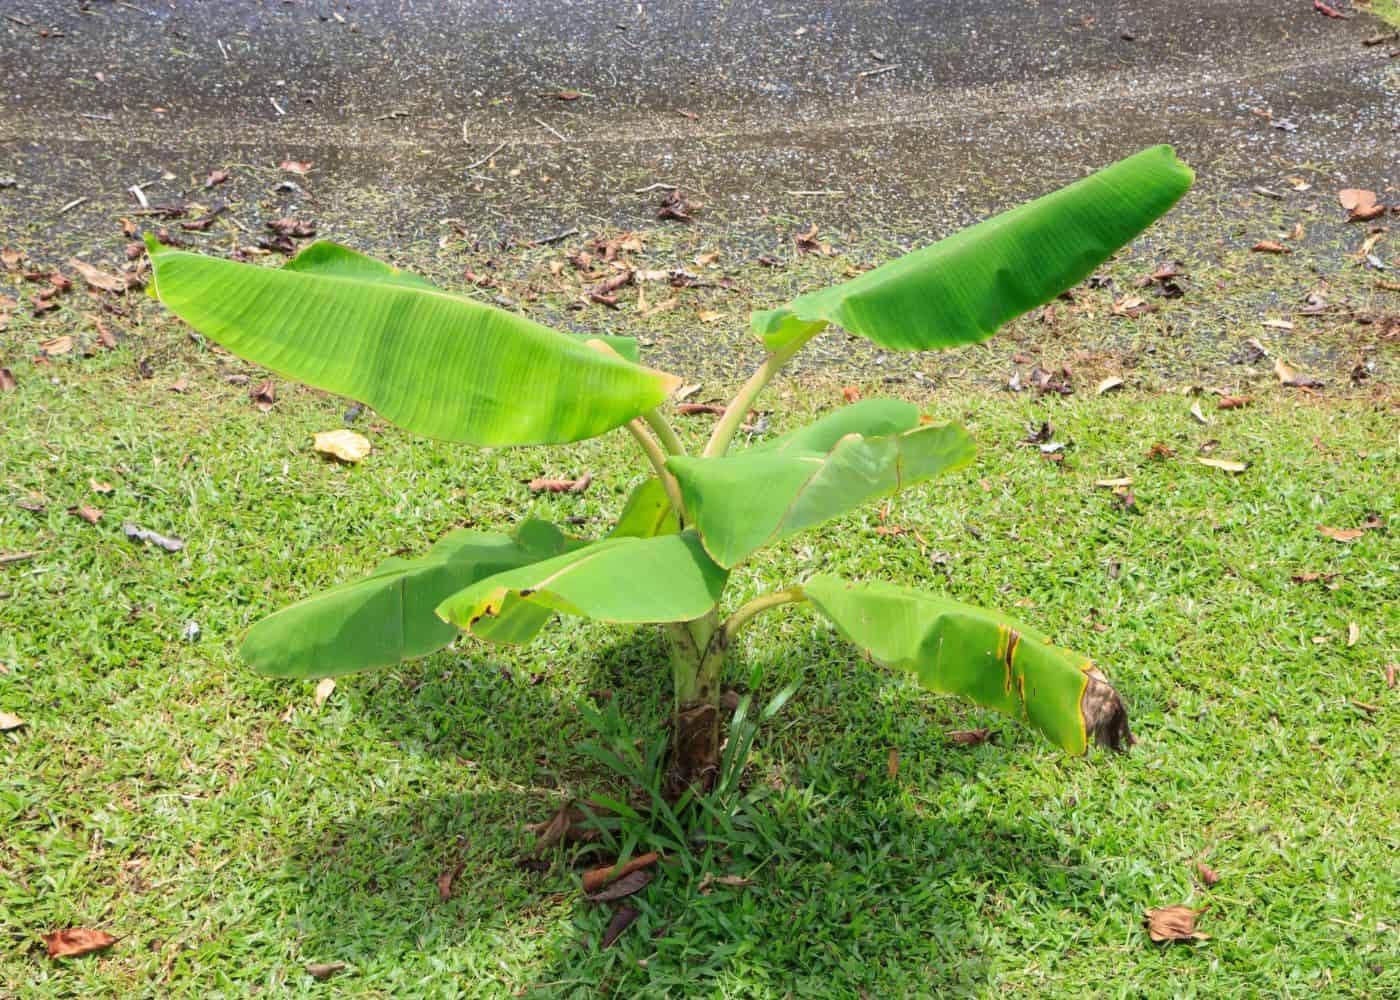 How fast does a banana tree grow